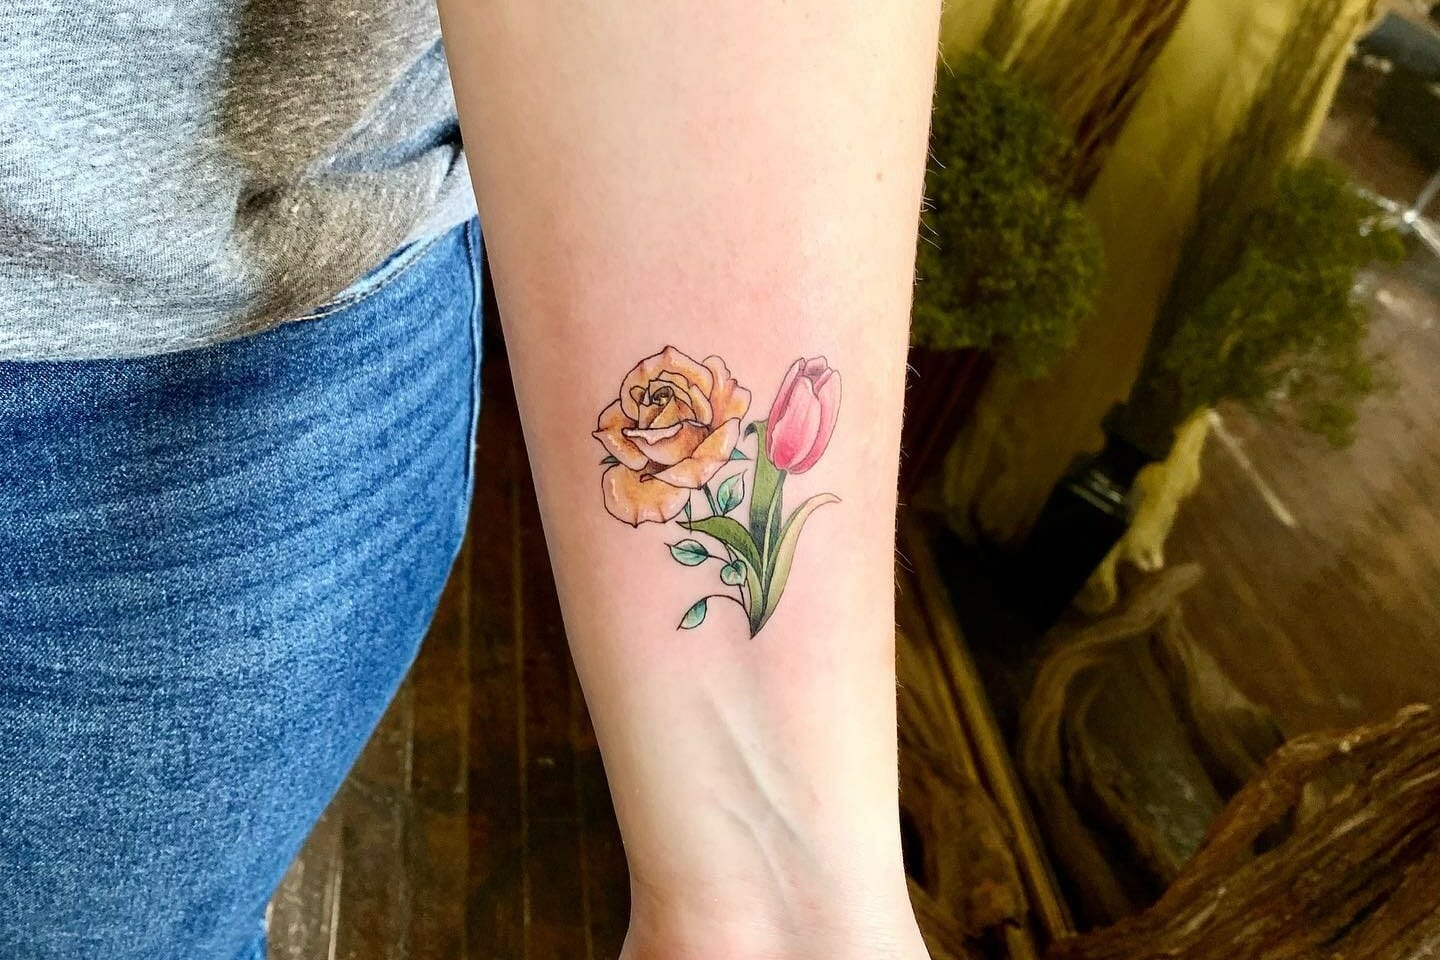 150 Rose Tattoos Ideas Tattoo Design in Full Bloom